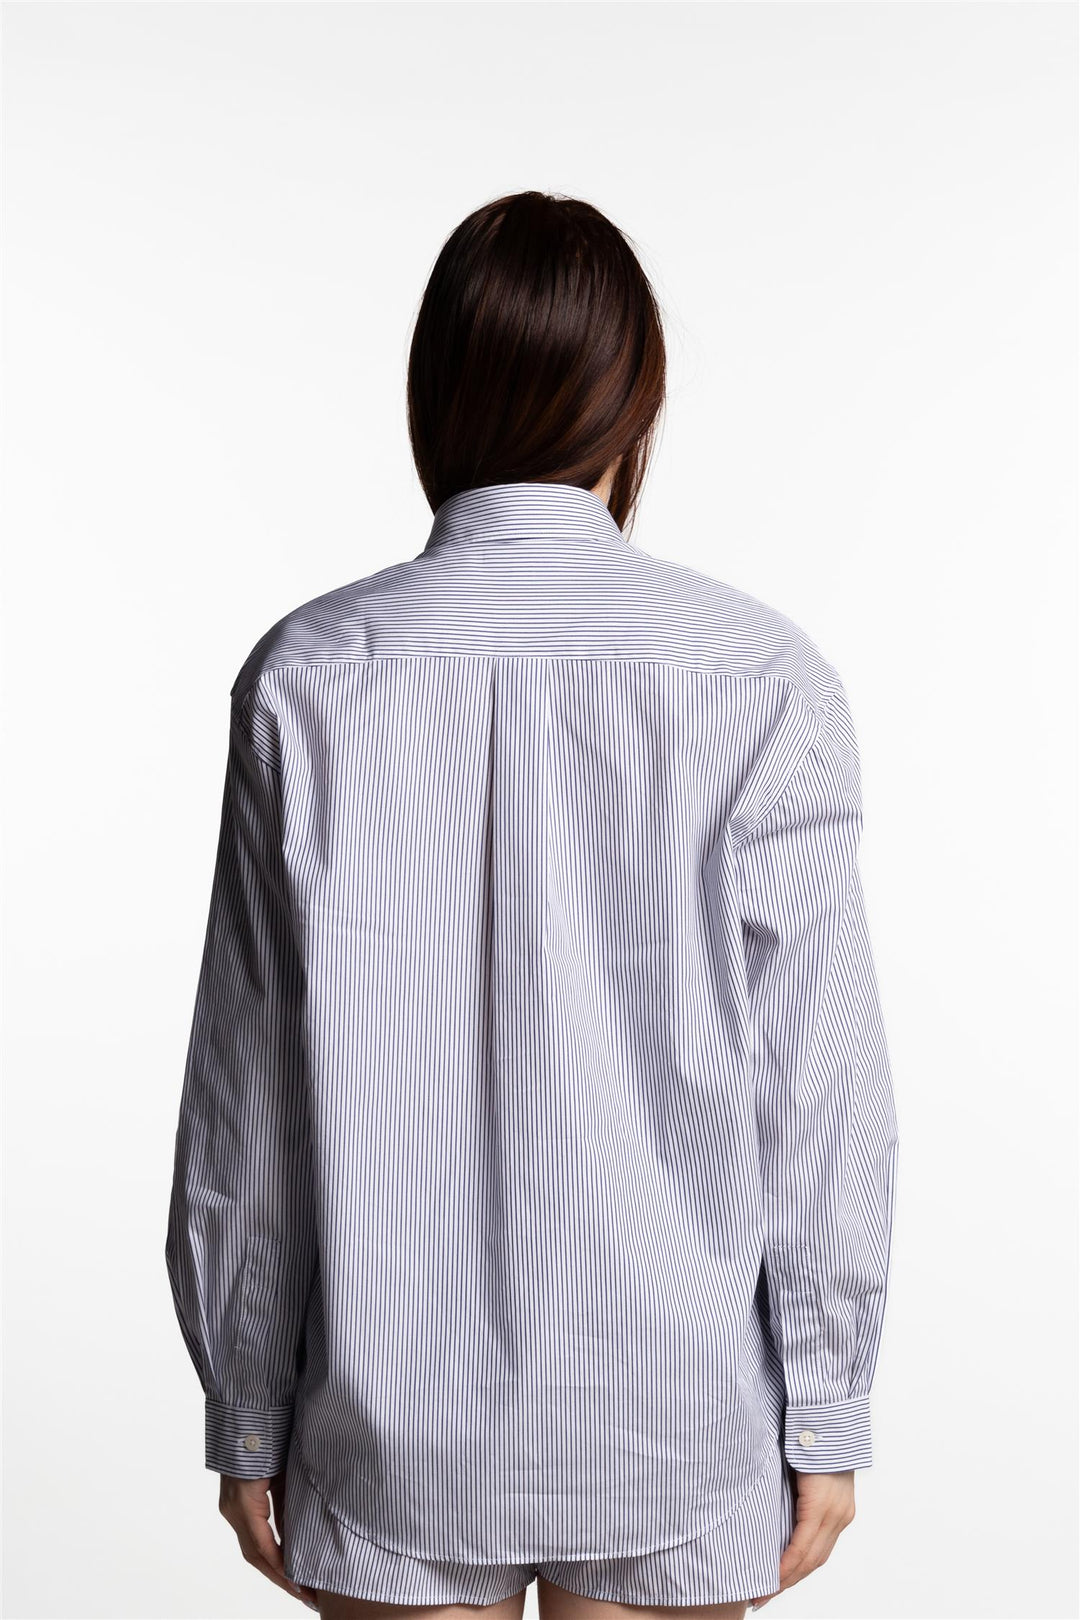 SRC Embroidered Oversized Shirt- White/Navy Thin Stripe/Navy